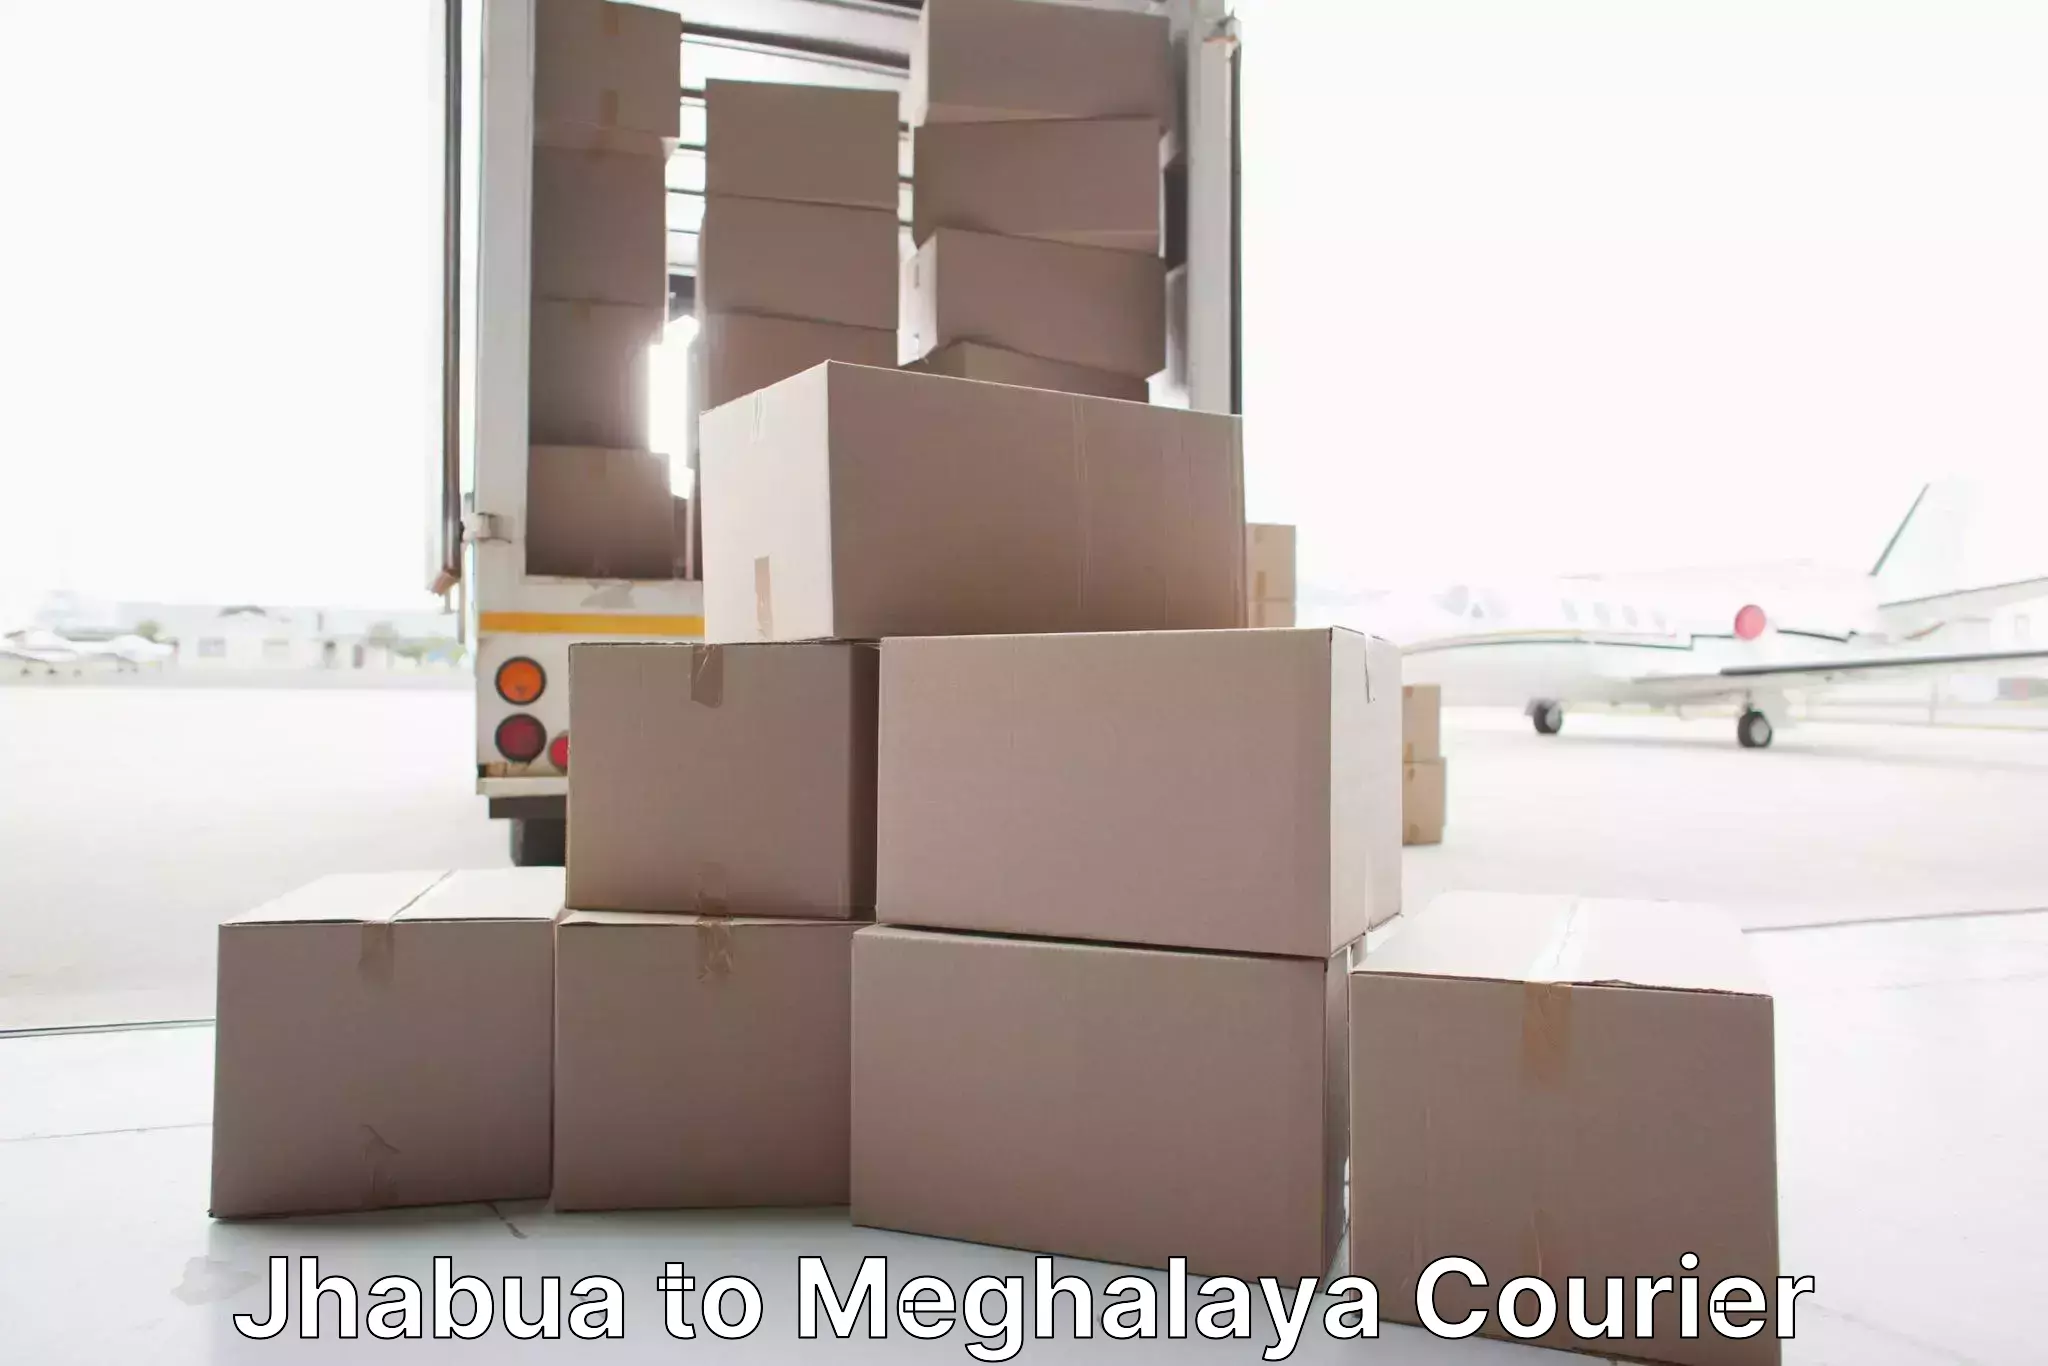 Professional moving company Jhabua to Meghalaya